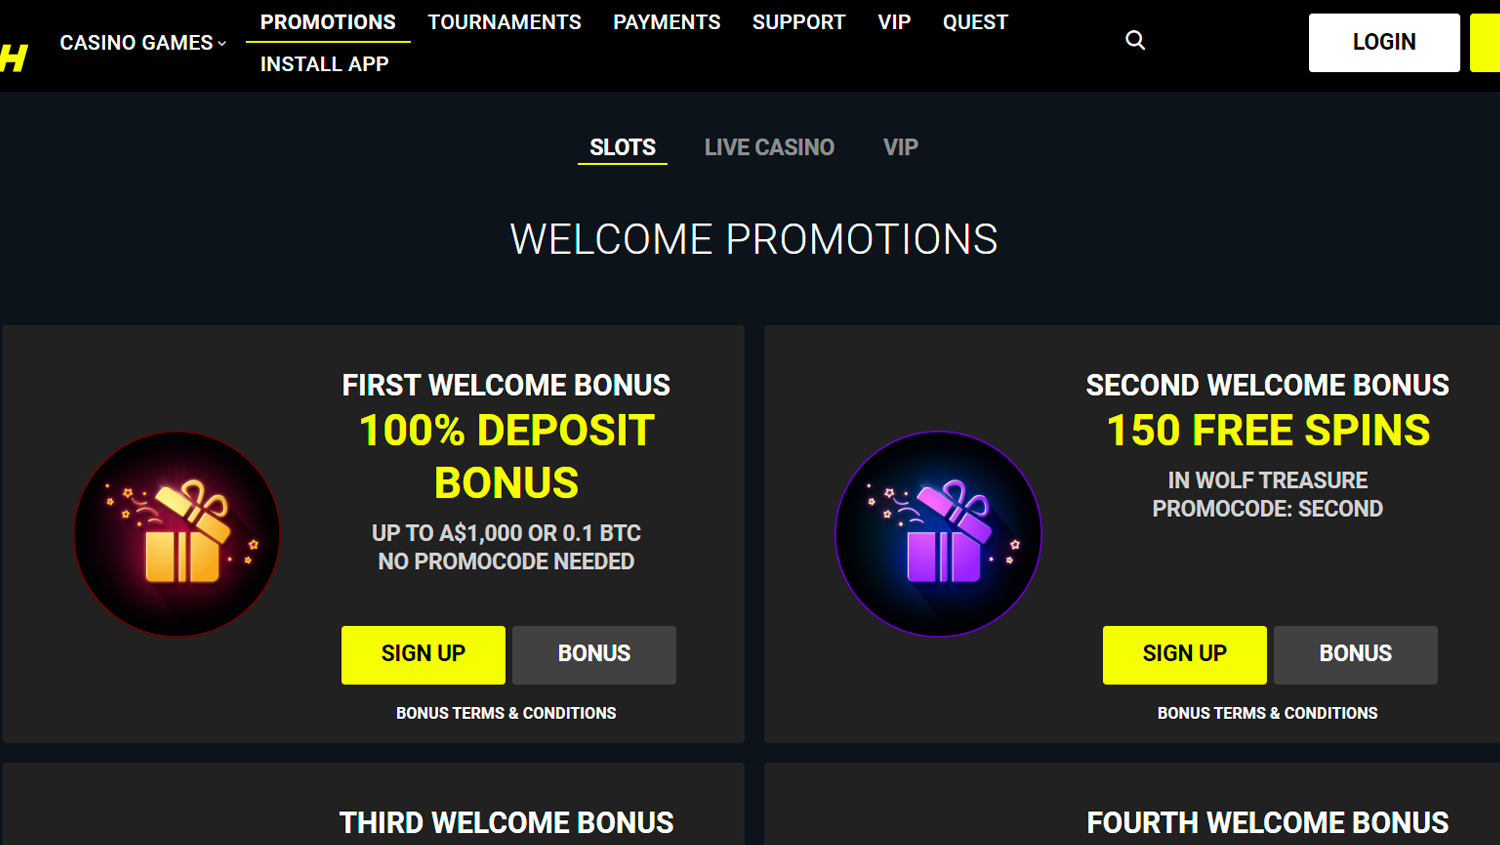 Promotions category on Parimatch casino site